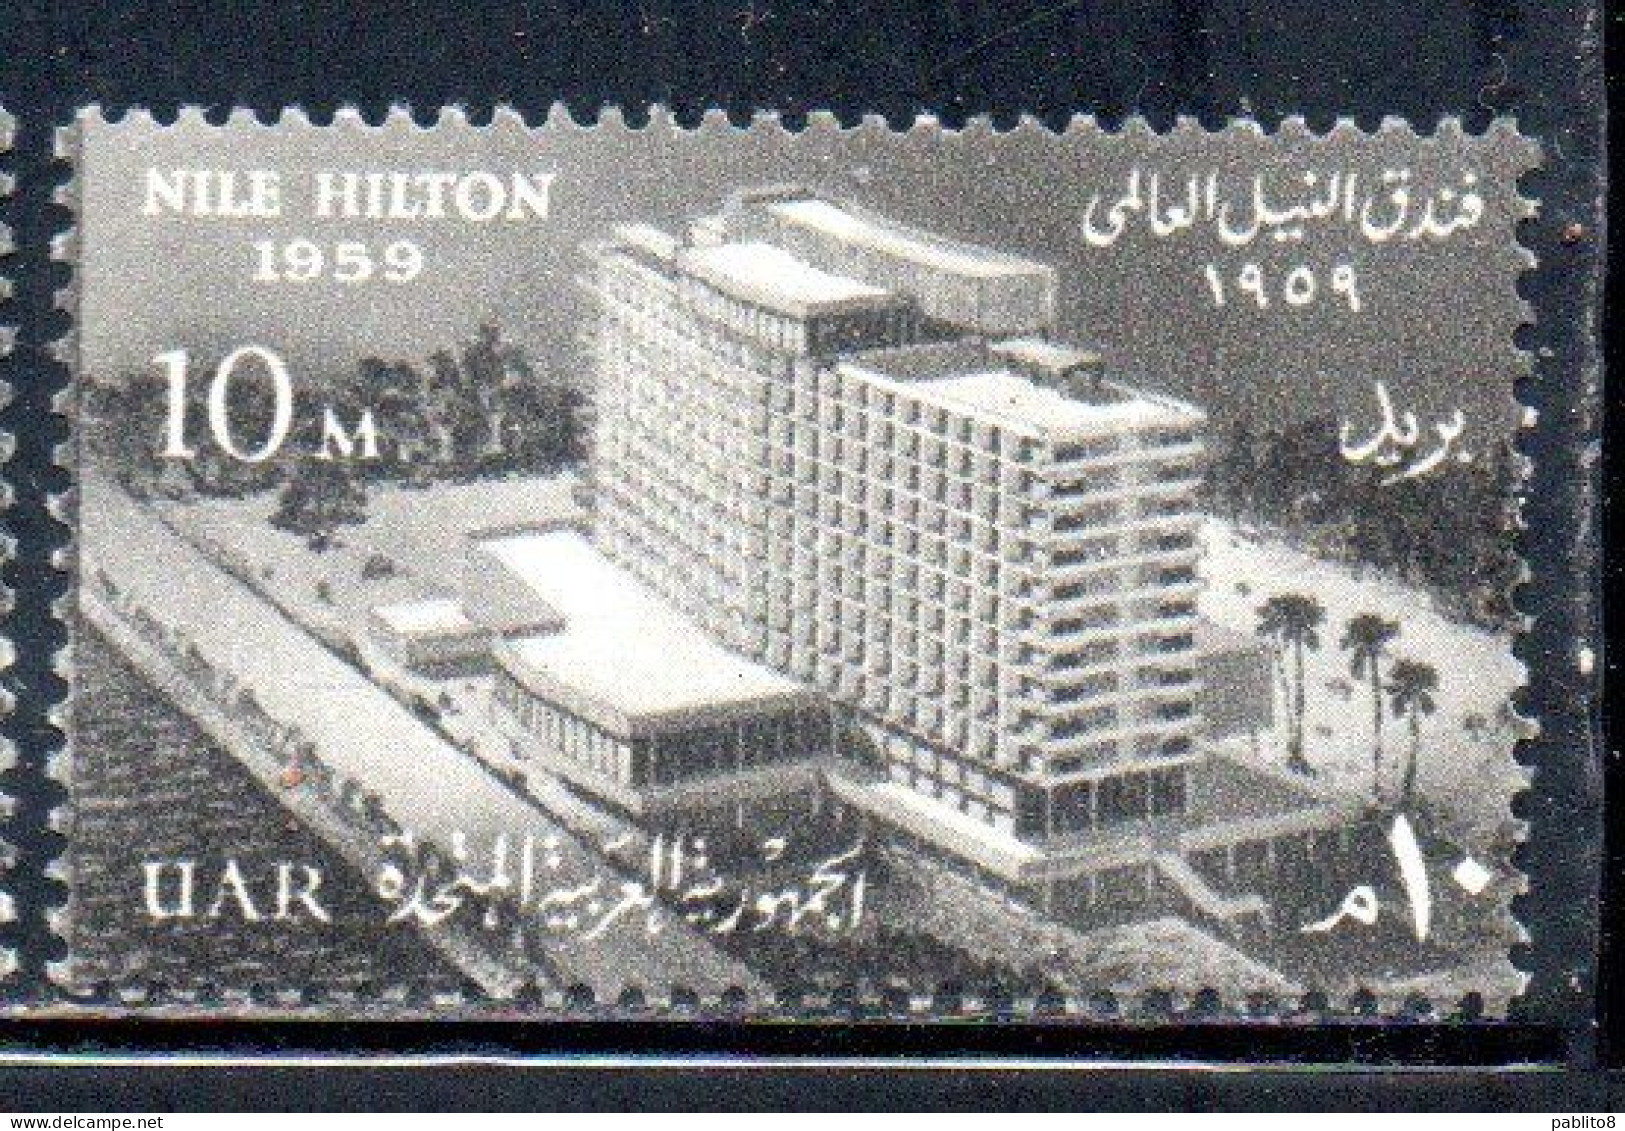 UAR EGYPT EGITTO 1959 OPENING OF THE NILE HILTON HOTEL CAIRO 10m MH - Neufs